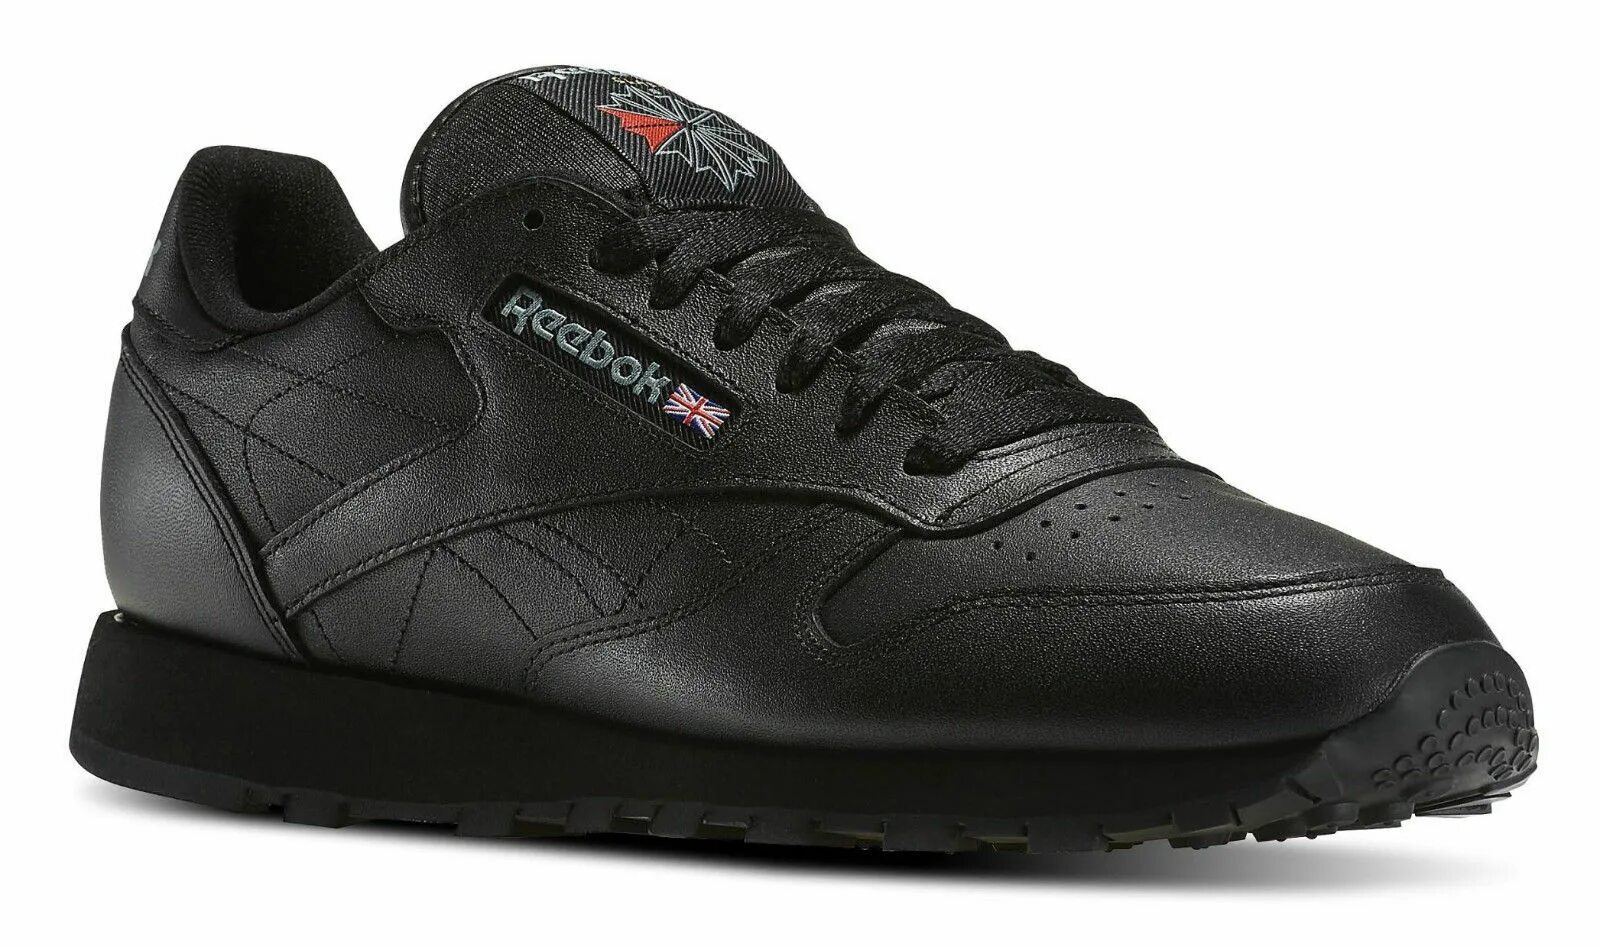 Reebok Classic Leather Black. Reebok Classic Black. Reebok Classic Leather Black Gum 49798 Mens Classic Running Shoes. Кроссовки Reebok Tennis черные мужские нат.кожа. Купить reebok leather